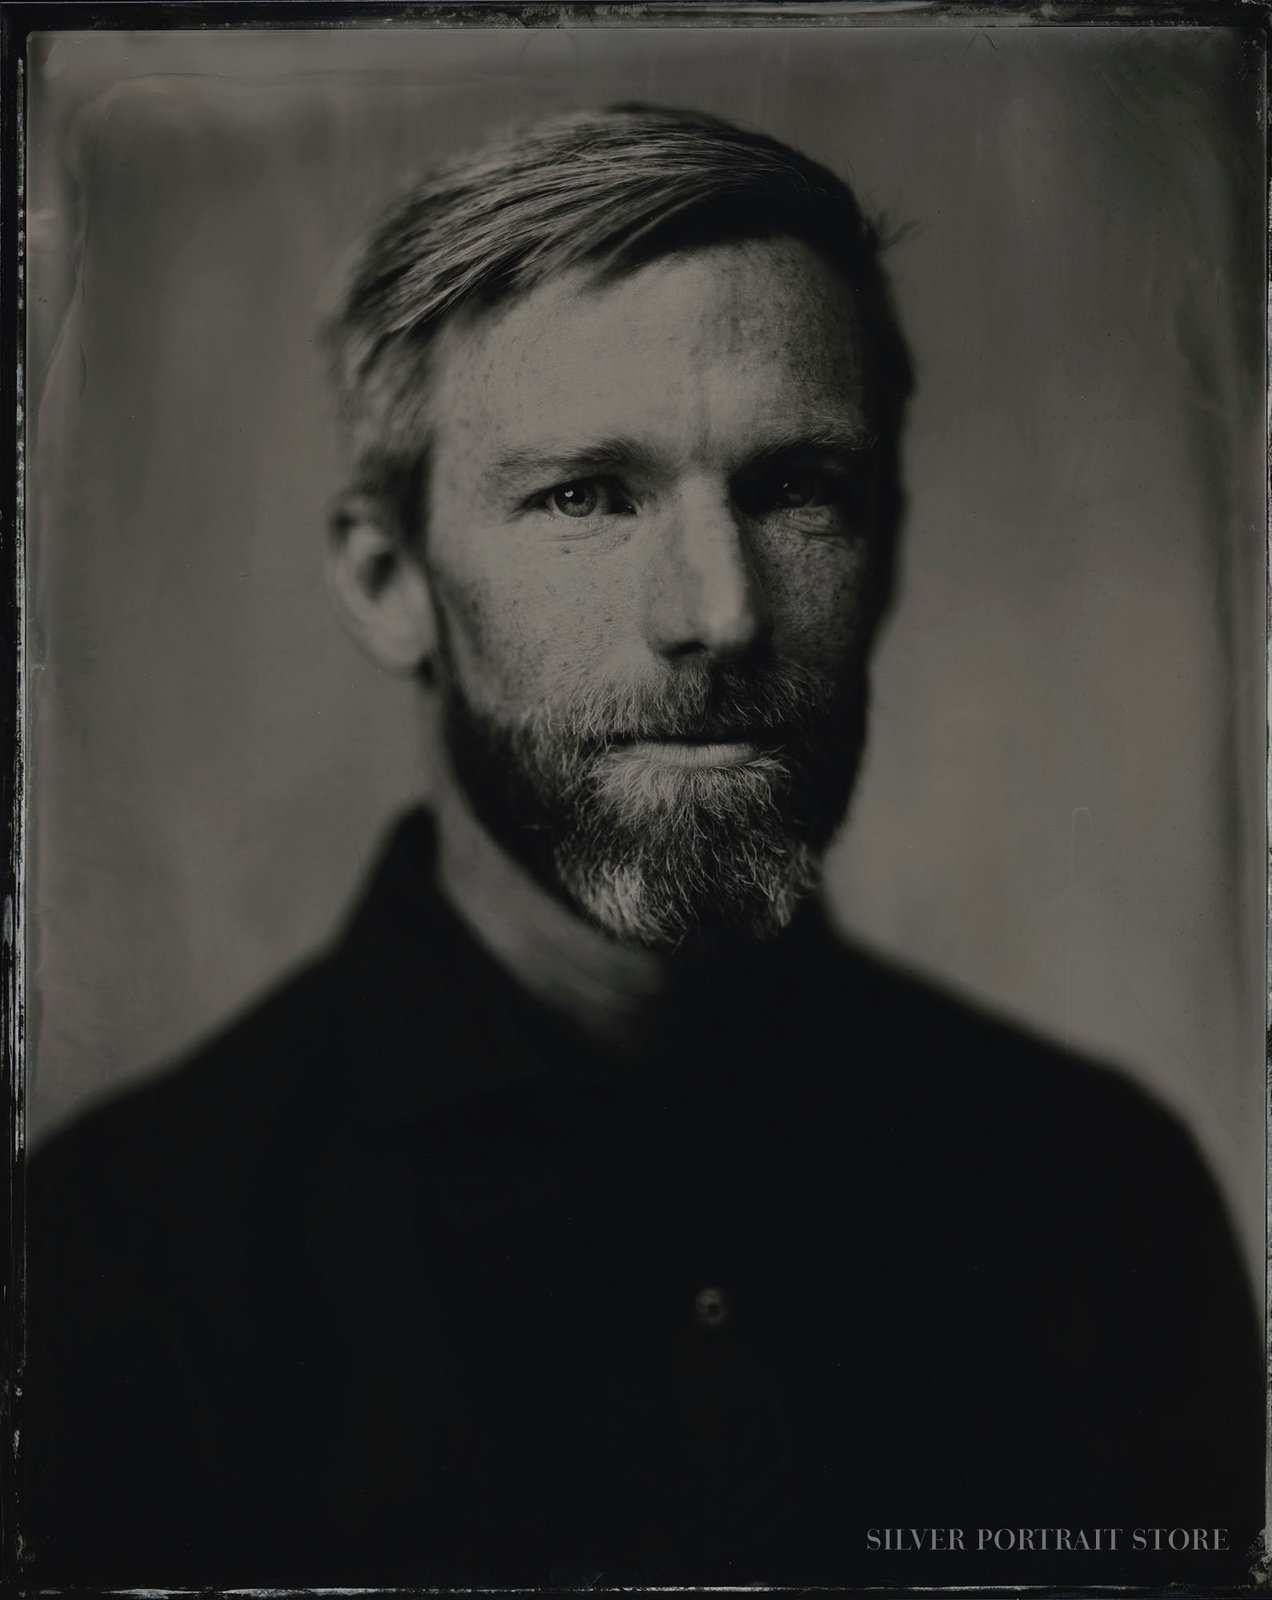 Jason-Silver Portrait Store-Wet plate collodion-Tintype 20 x 25 cm.